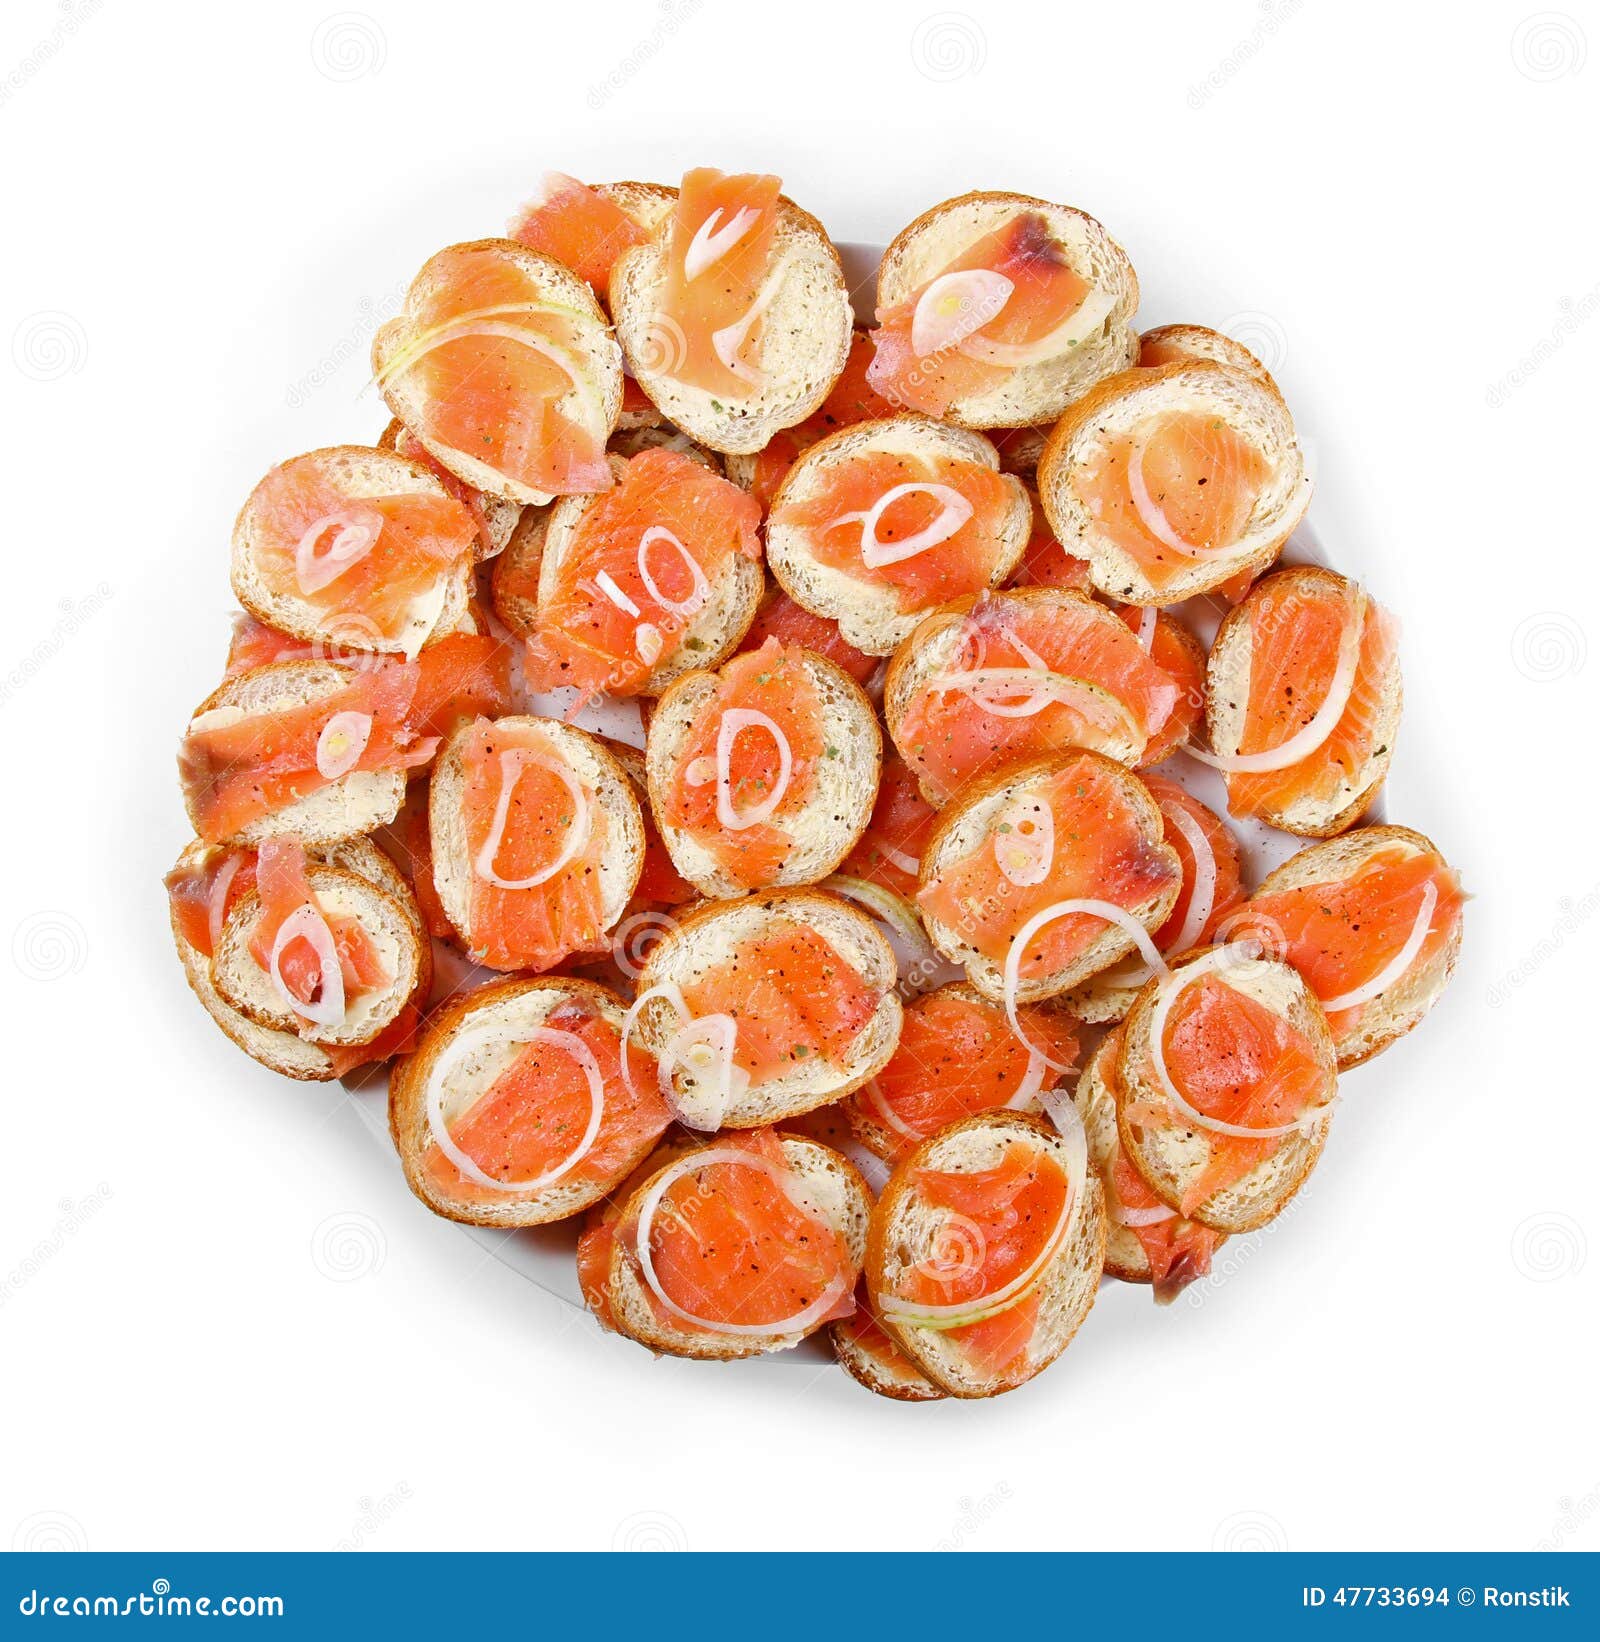 Salmon snacks on dish isolated on white background